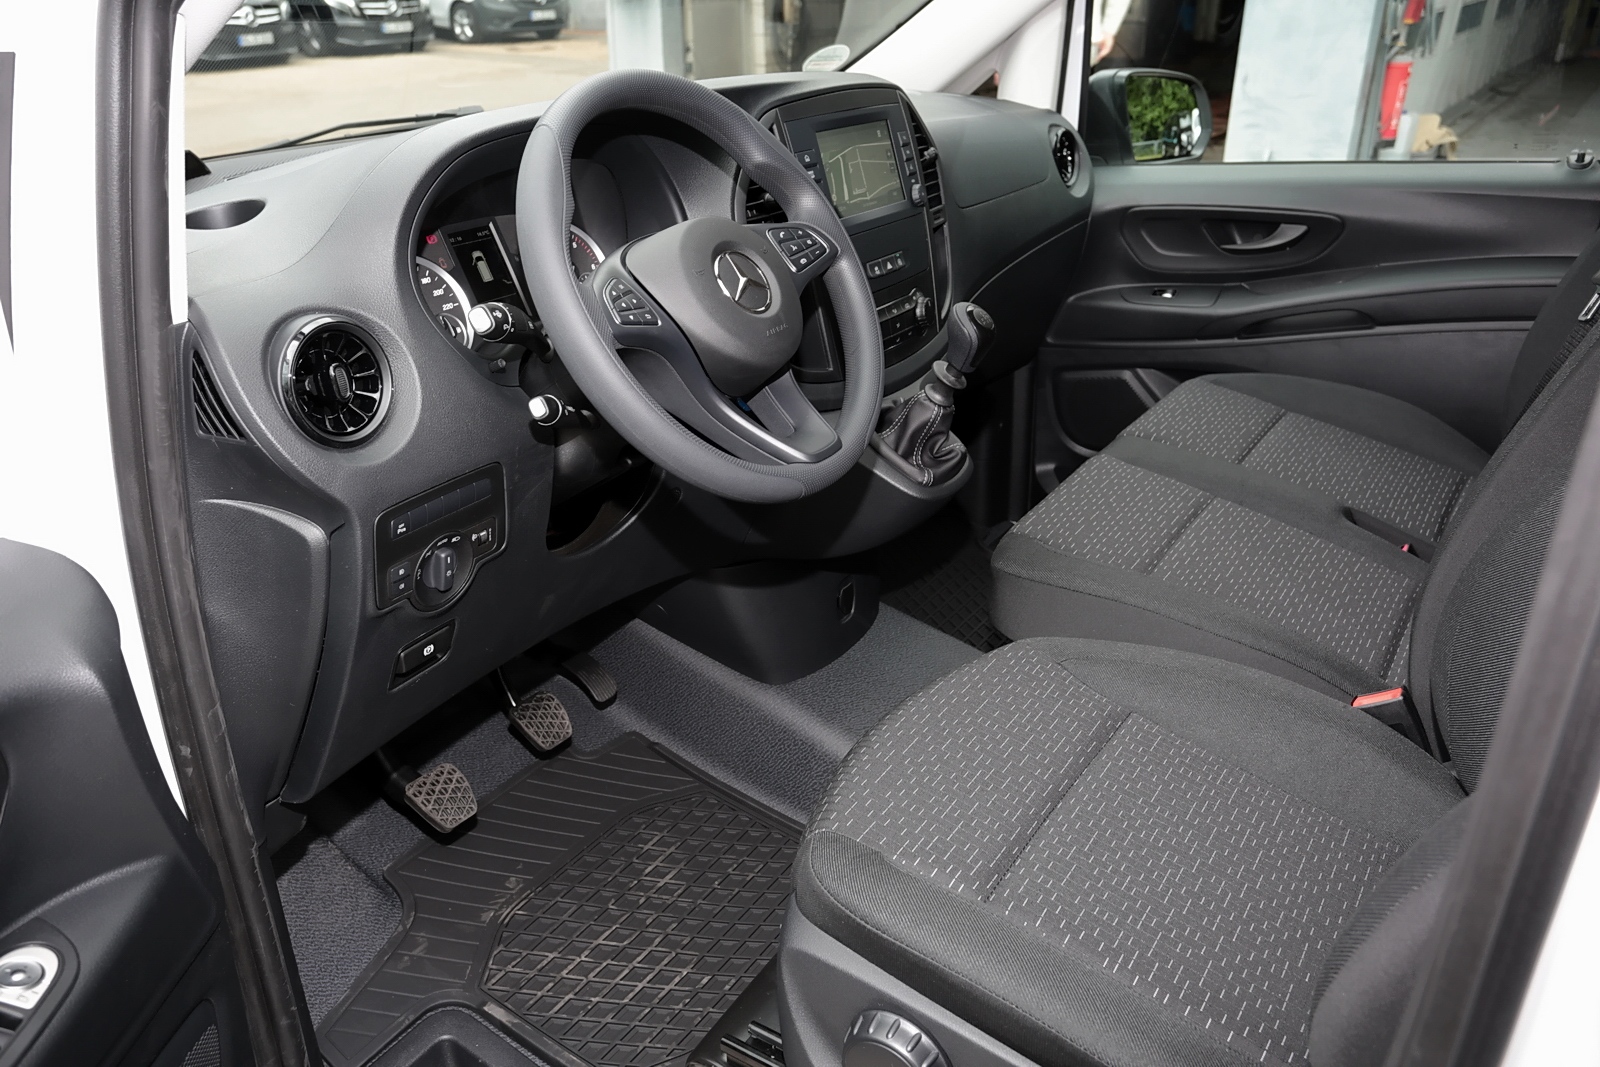 Mercedes-Benz Vito 114 Kasten Pro AHK+RüKam+Audio40+Sitzhz+DAB 